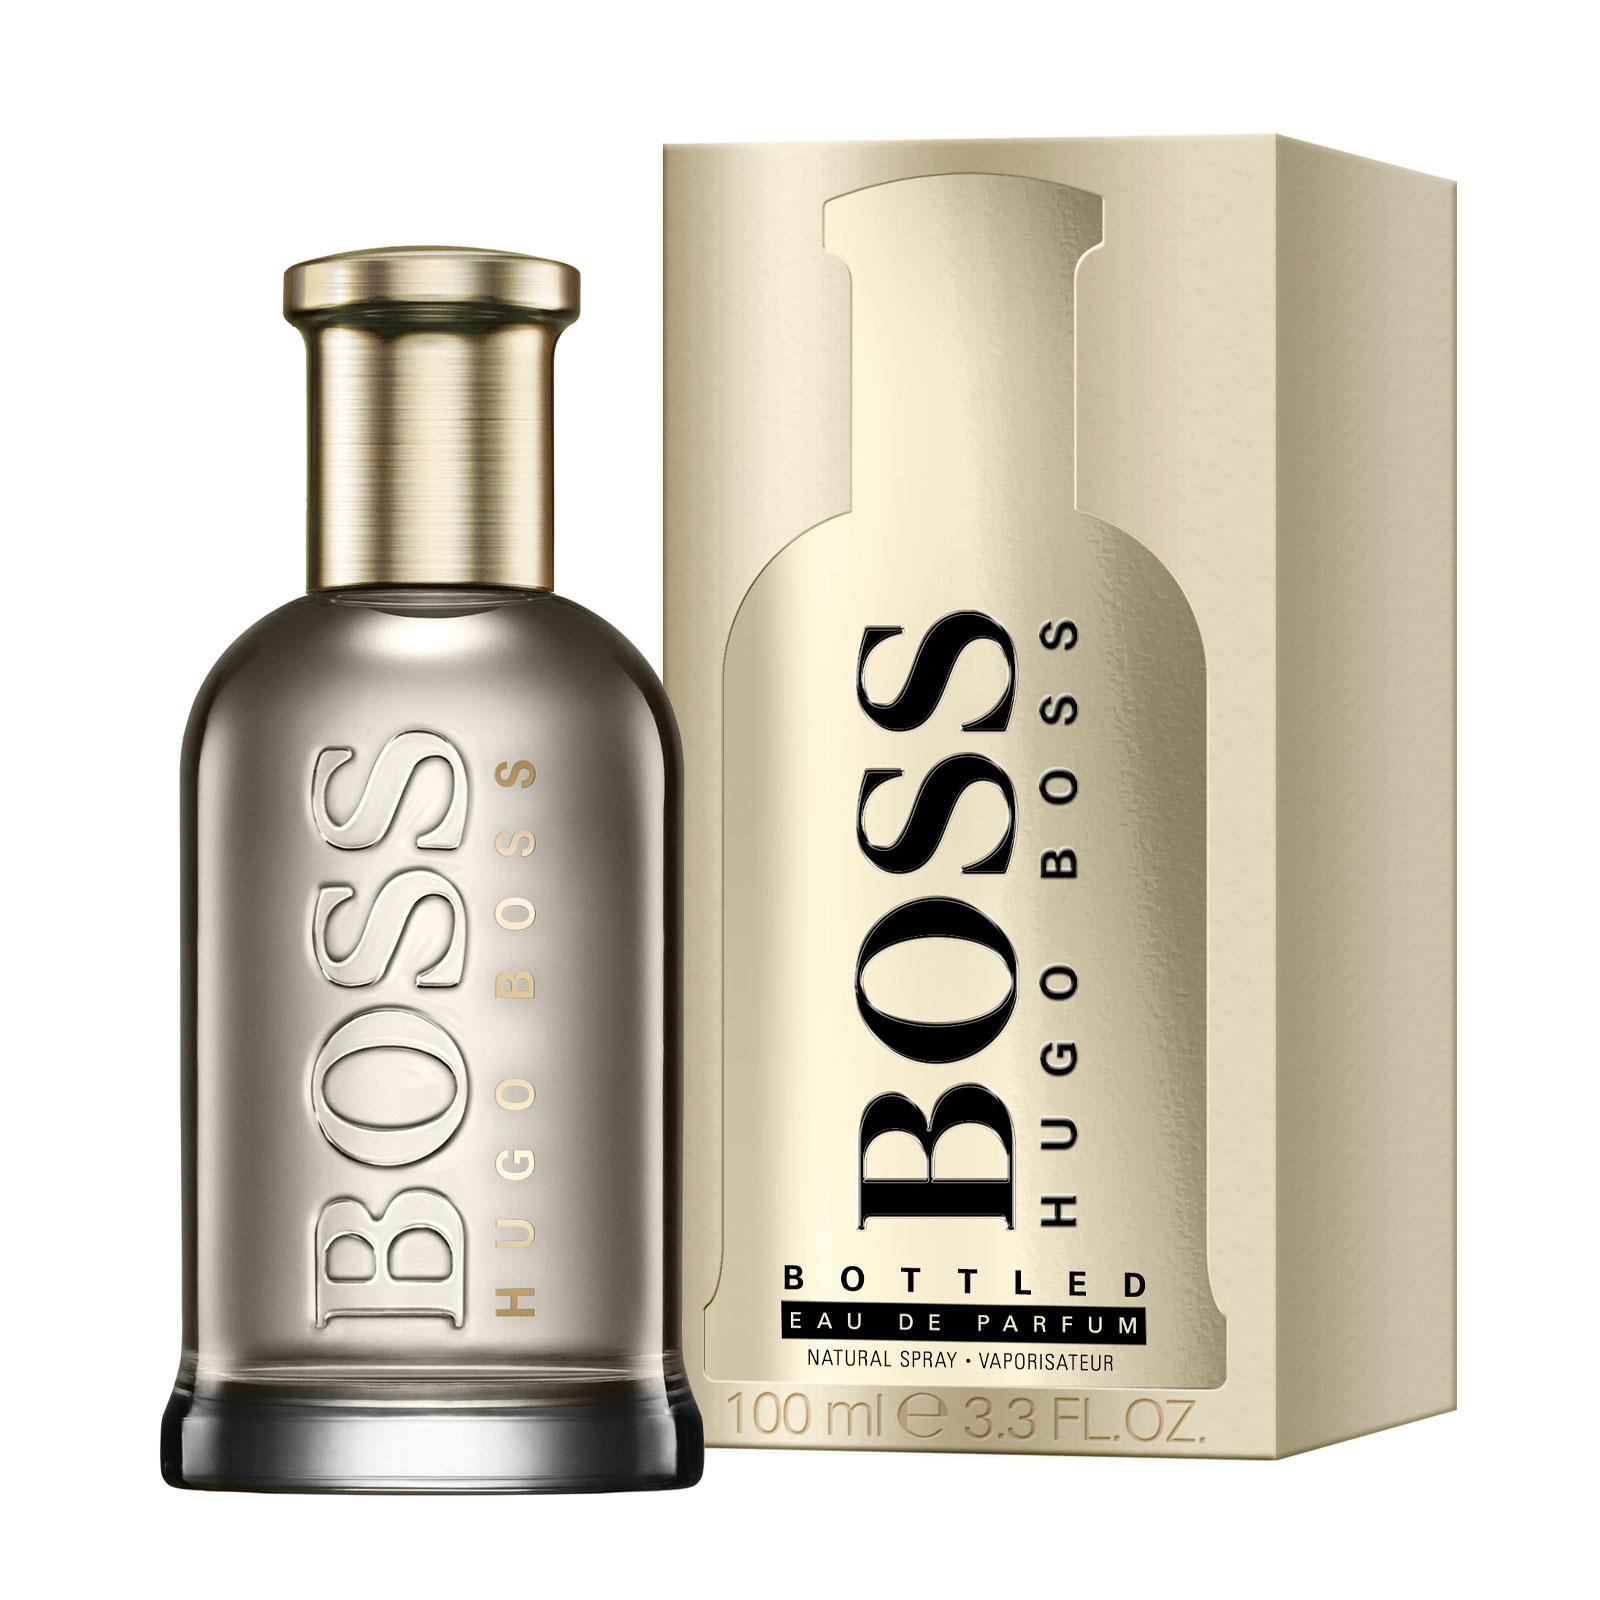 Hugo Boss Bottled Eau de Parfum 100ml | FEELUNIQUE